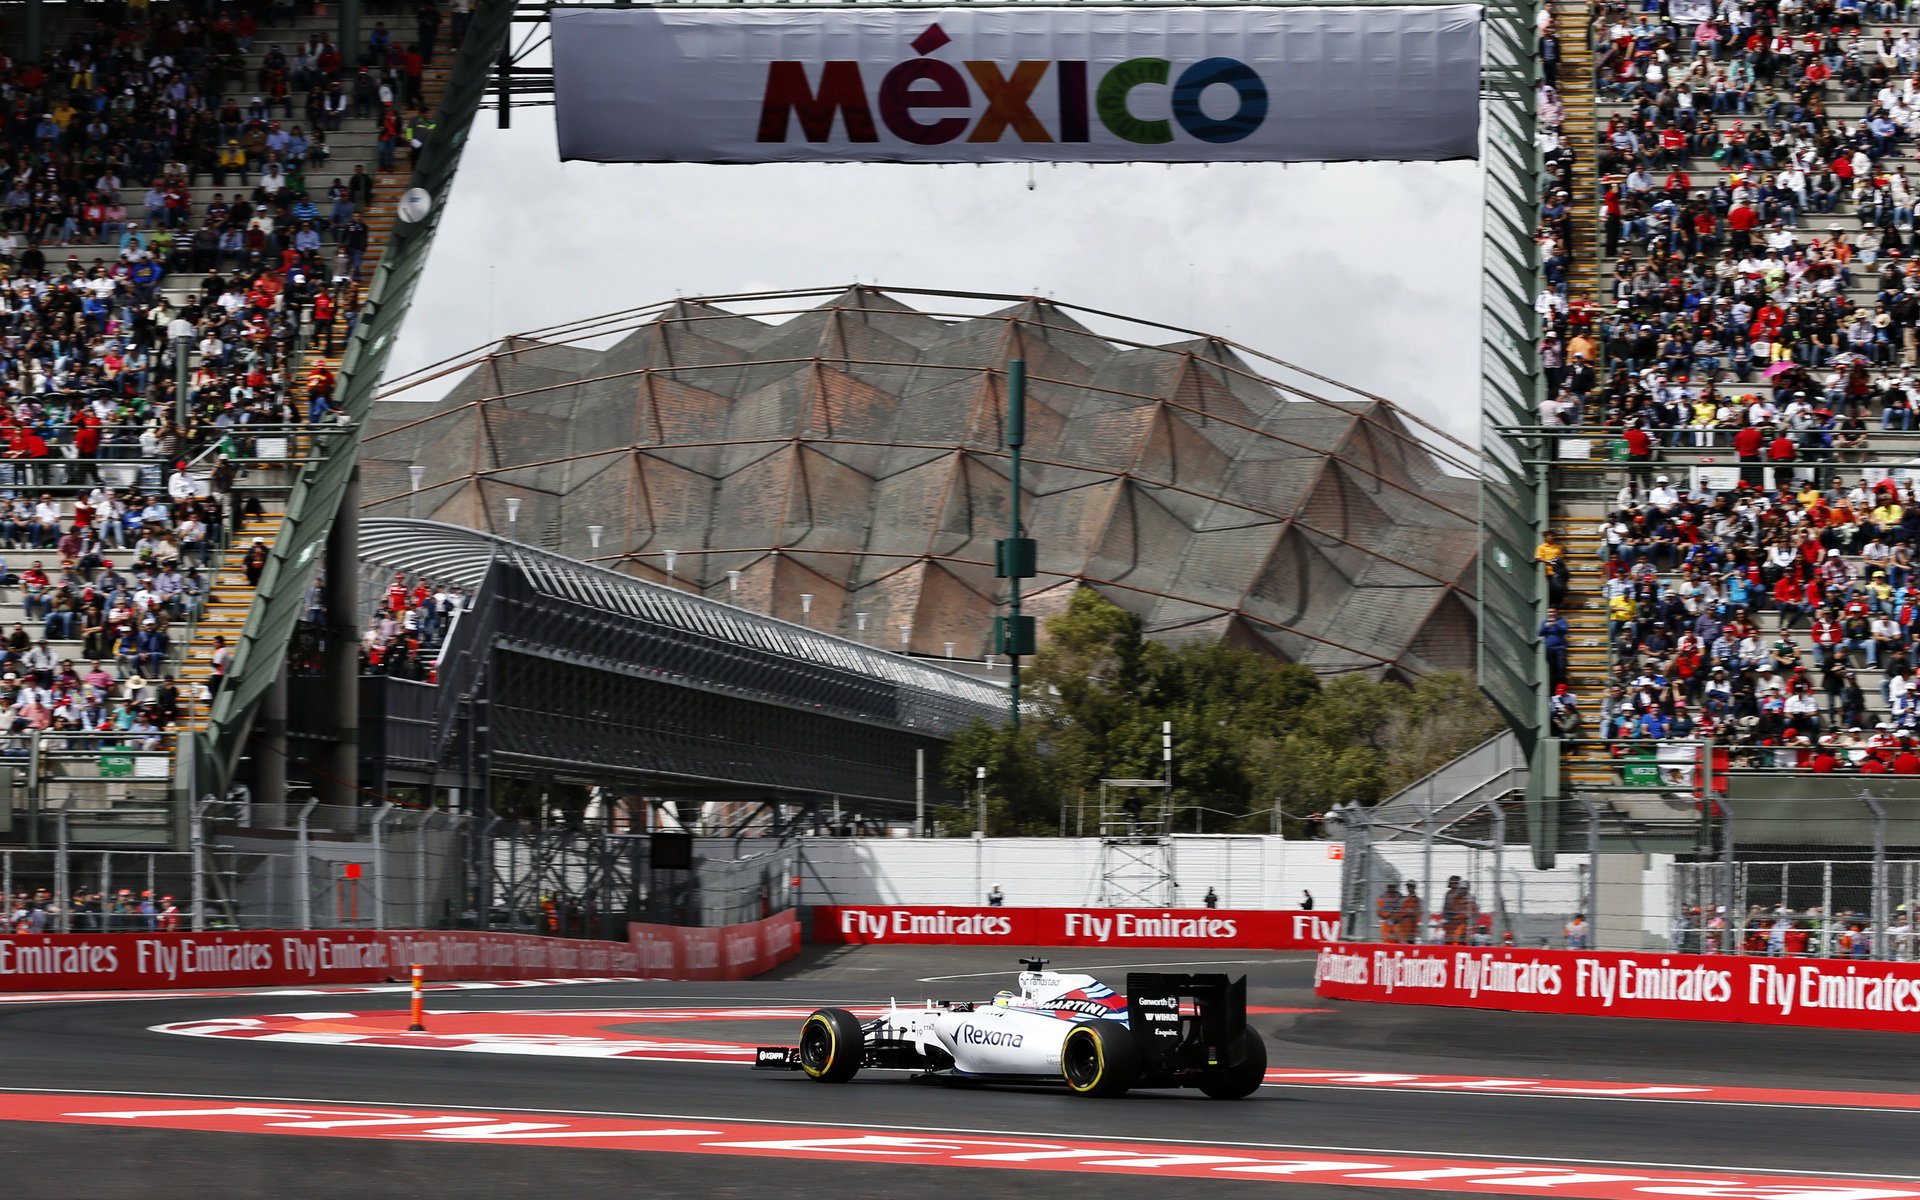 Felipe Massa v Mexiku